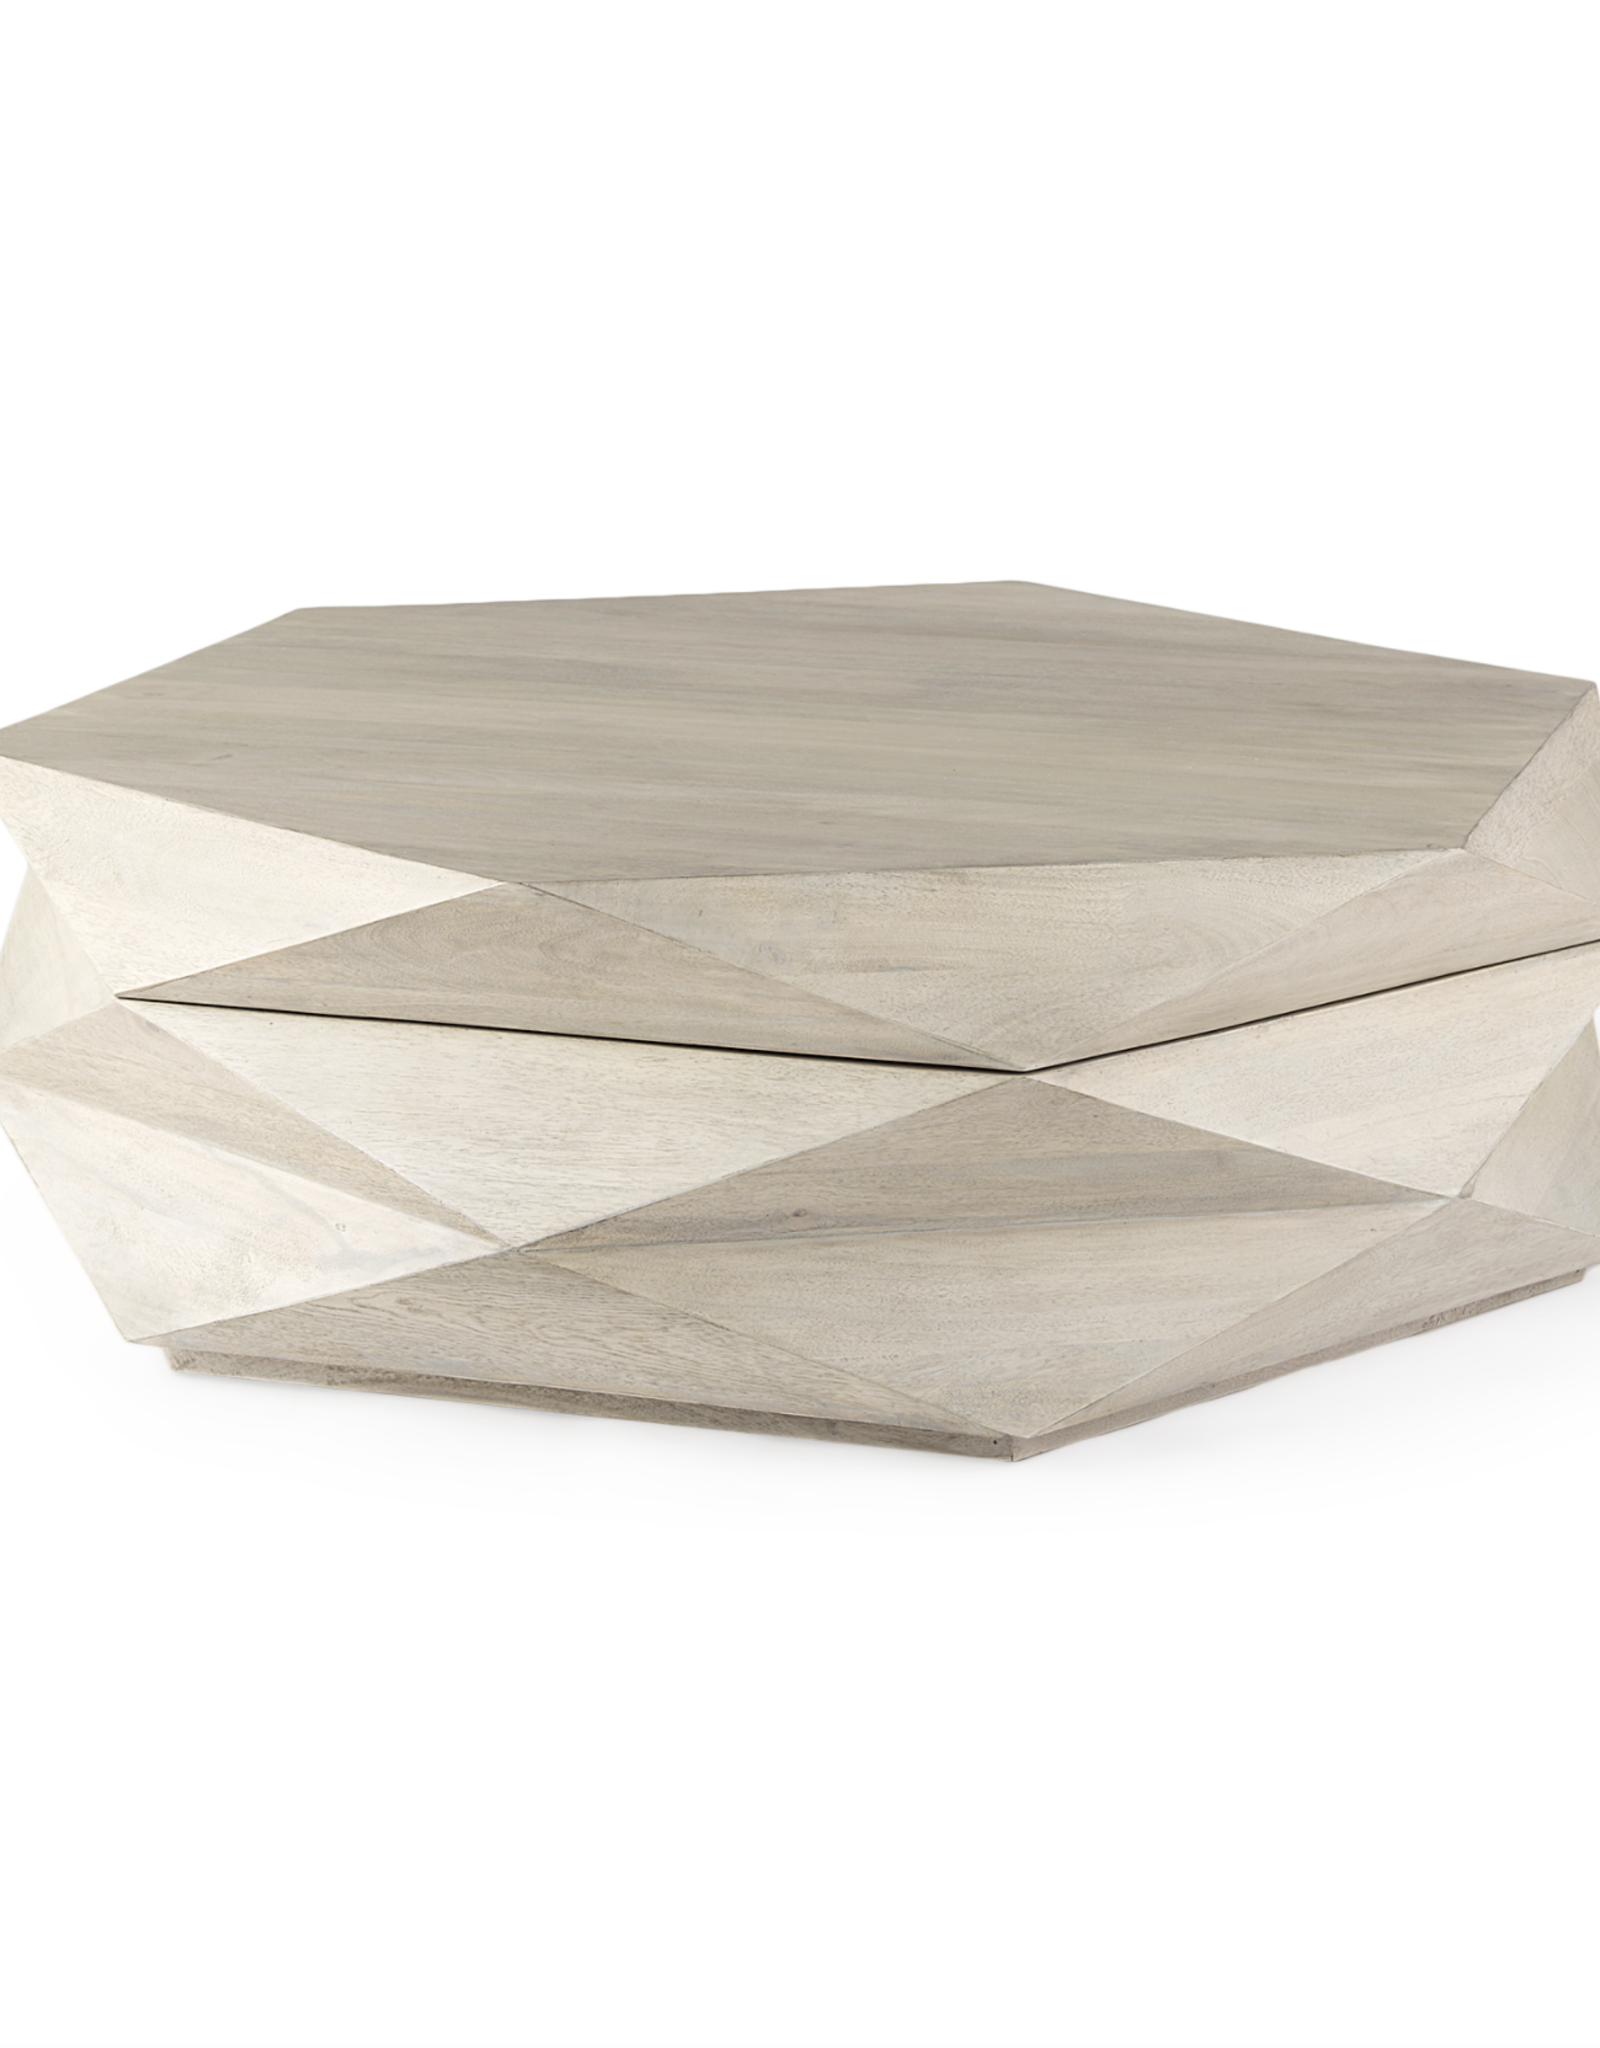 Arreto Hexagonal Storage Coffee Table - Natural Wood